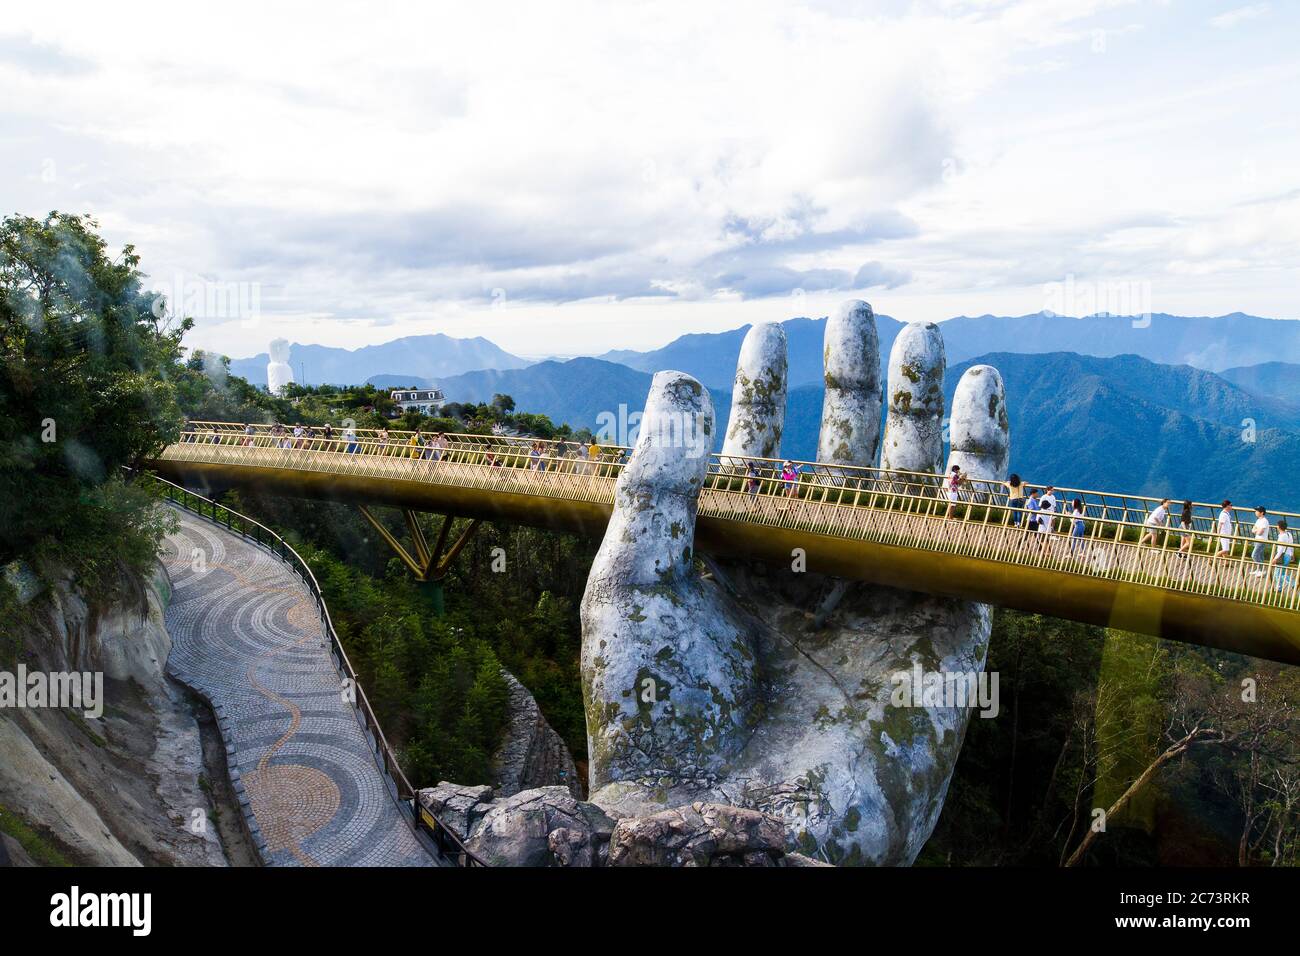 The Golden bridge on sky for walking in Ba Na hills, Da Nang, Vietnam in August 2019 Stock Photo